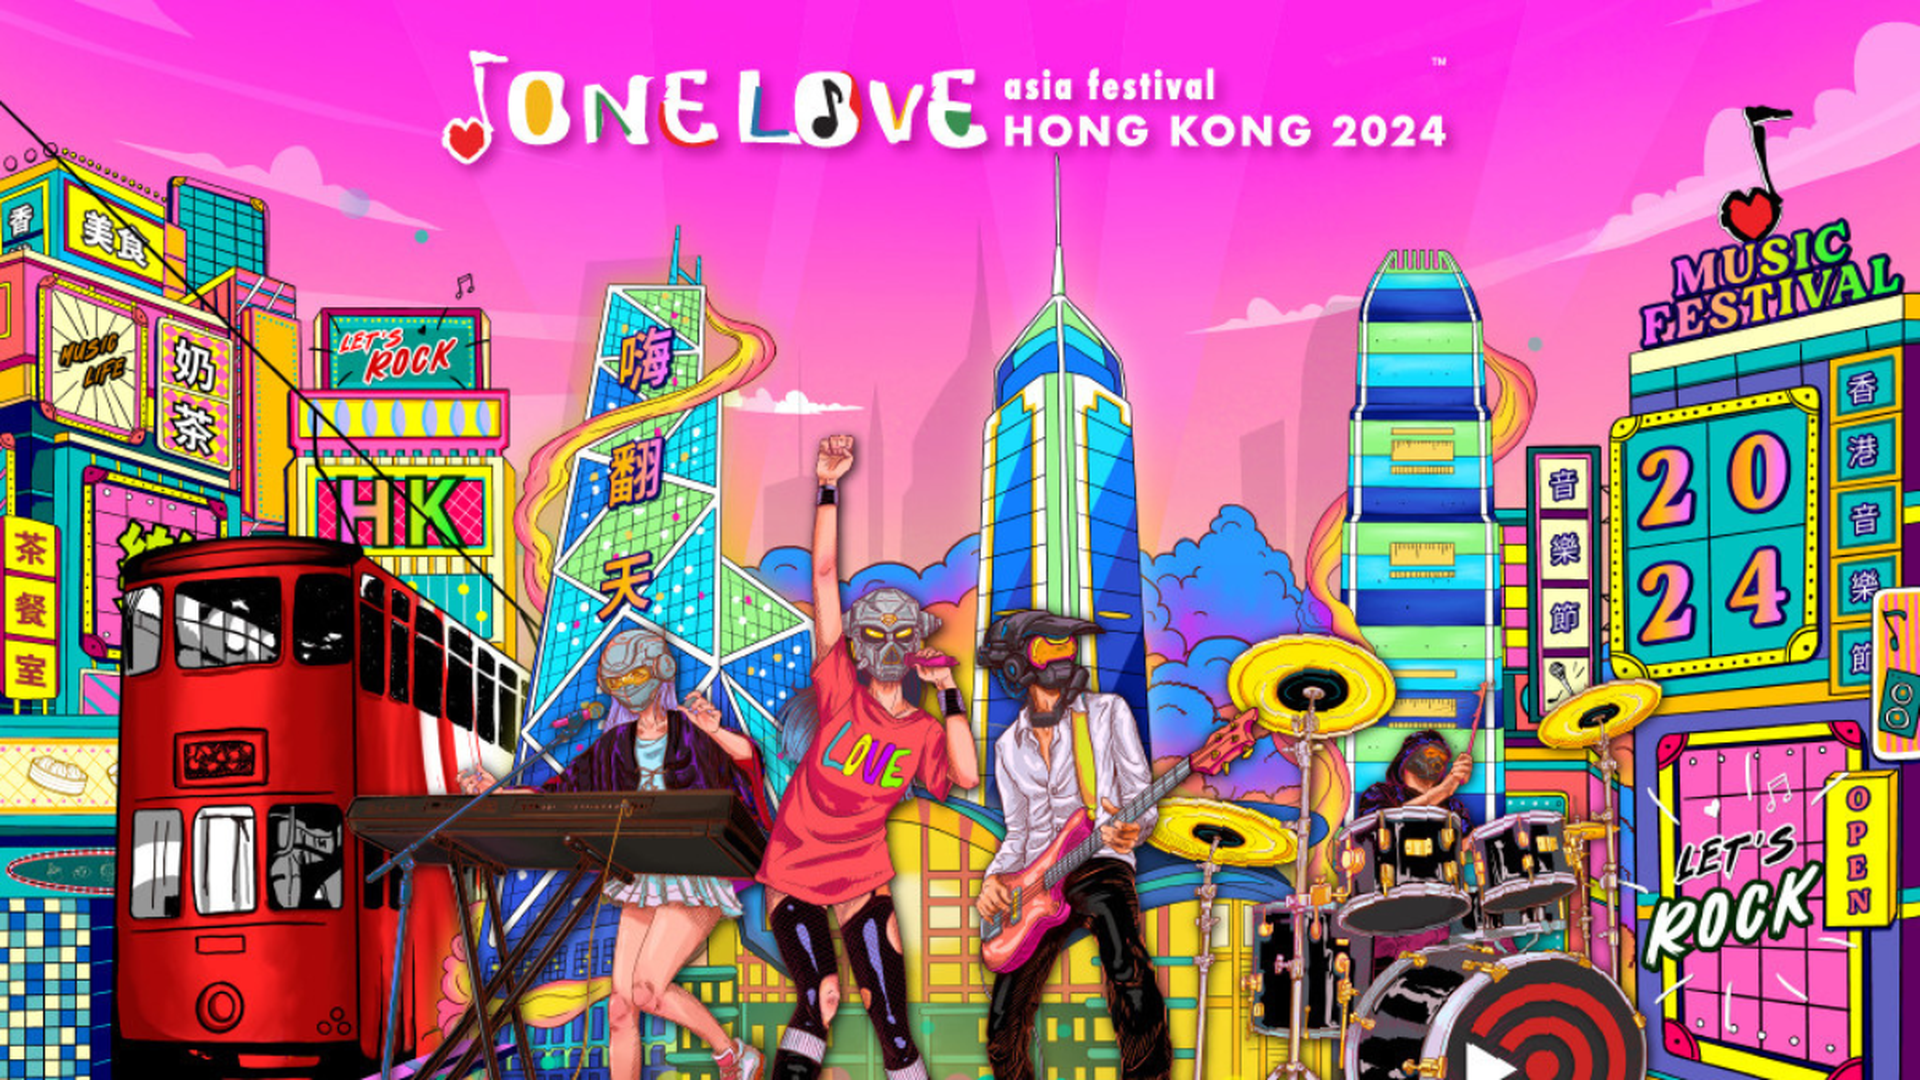 One Love Asia Festival Hong Kong 2024 首次登陸香港｜亞洲大型音樂節 雲集15組本地、海外歌手｜6月21-23日 中環海濱活動空間｜入場通行證 低至半價換購（需3個工作天前預訂）